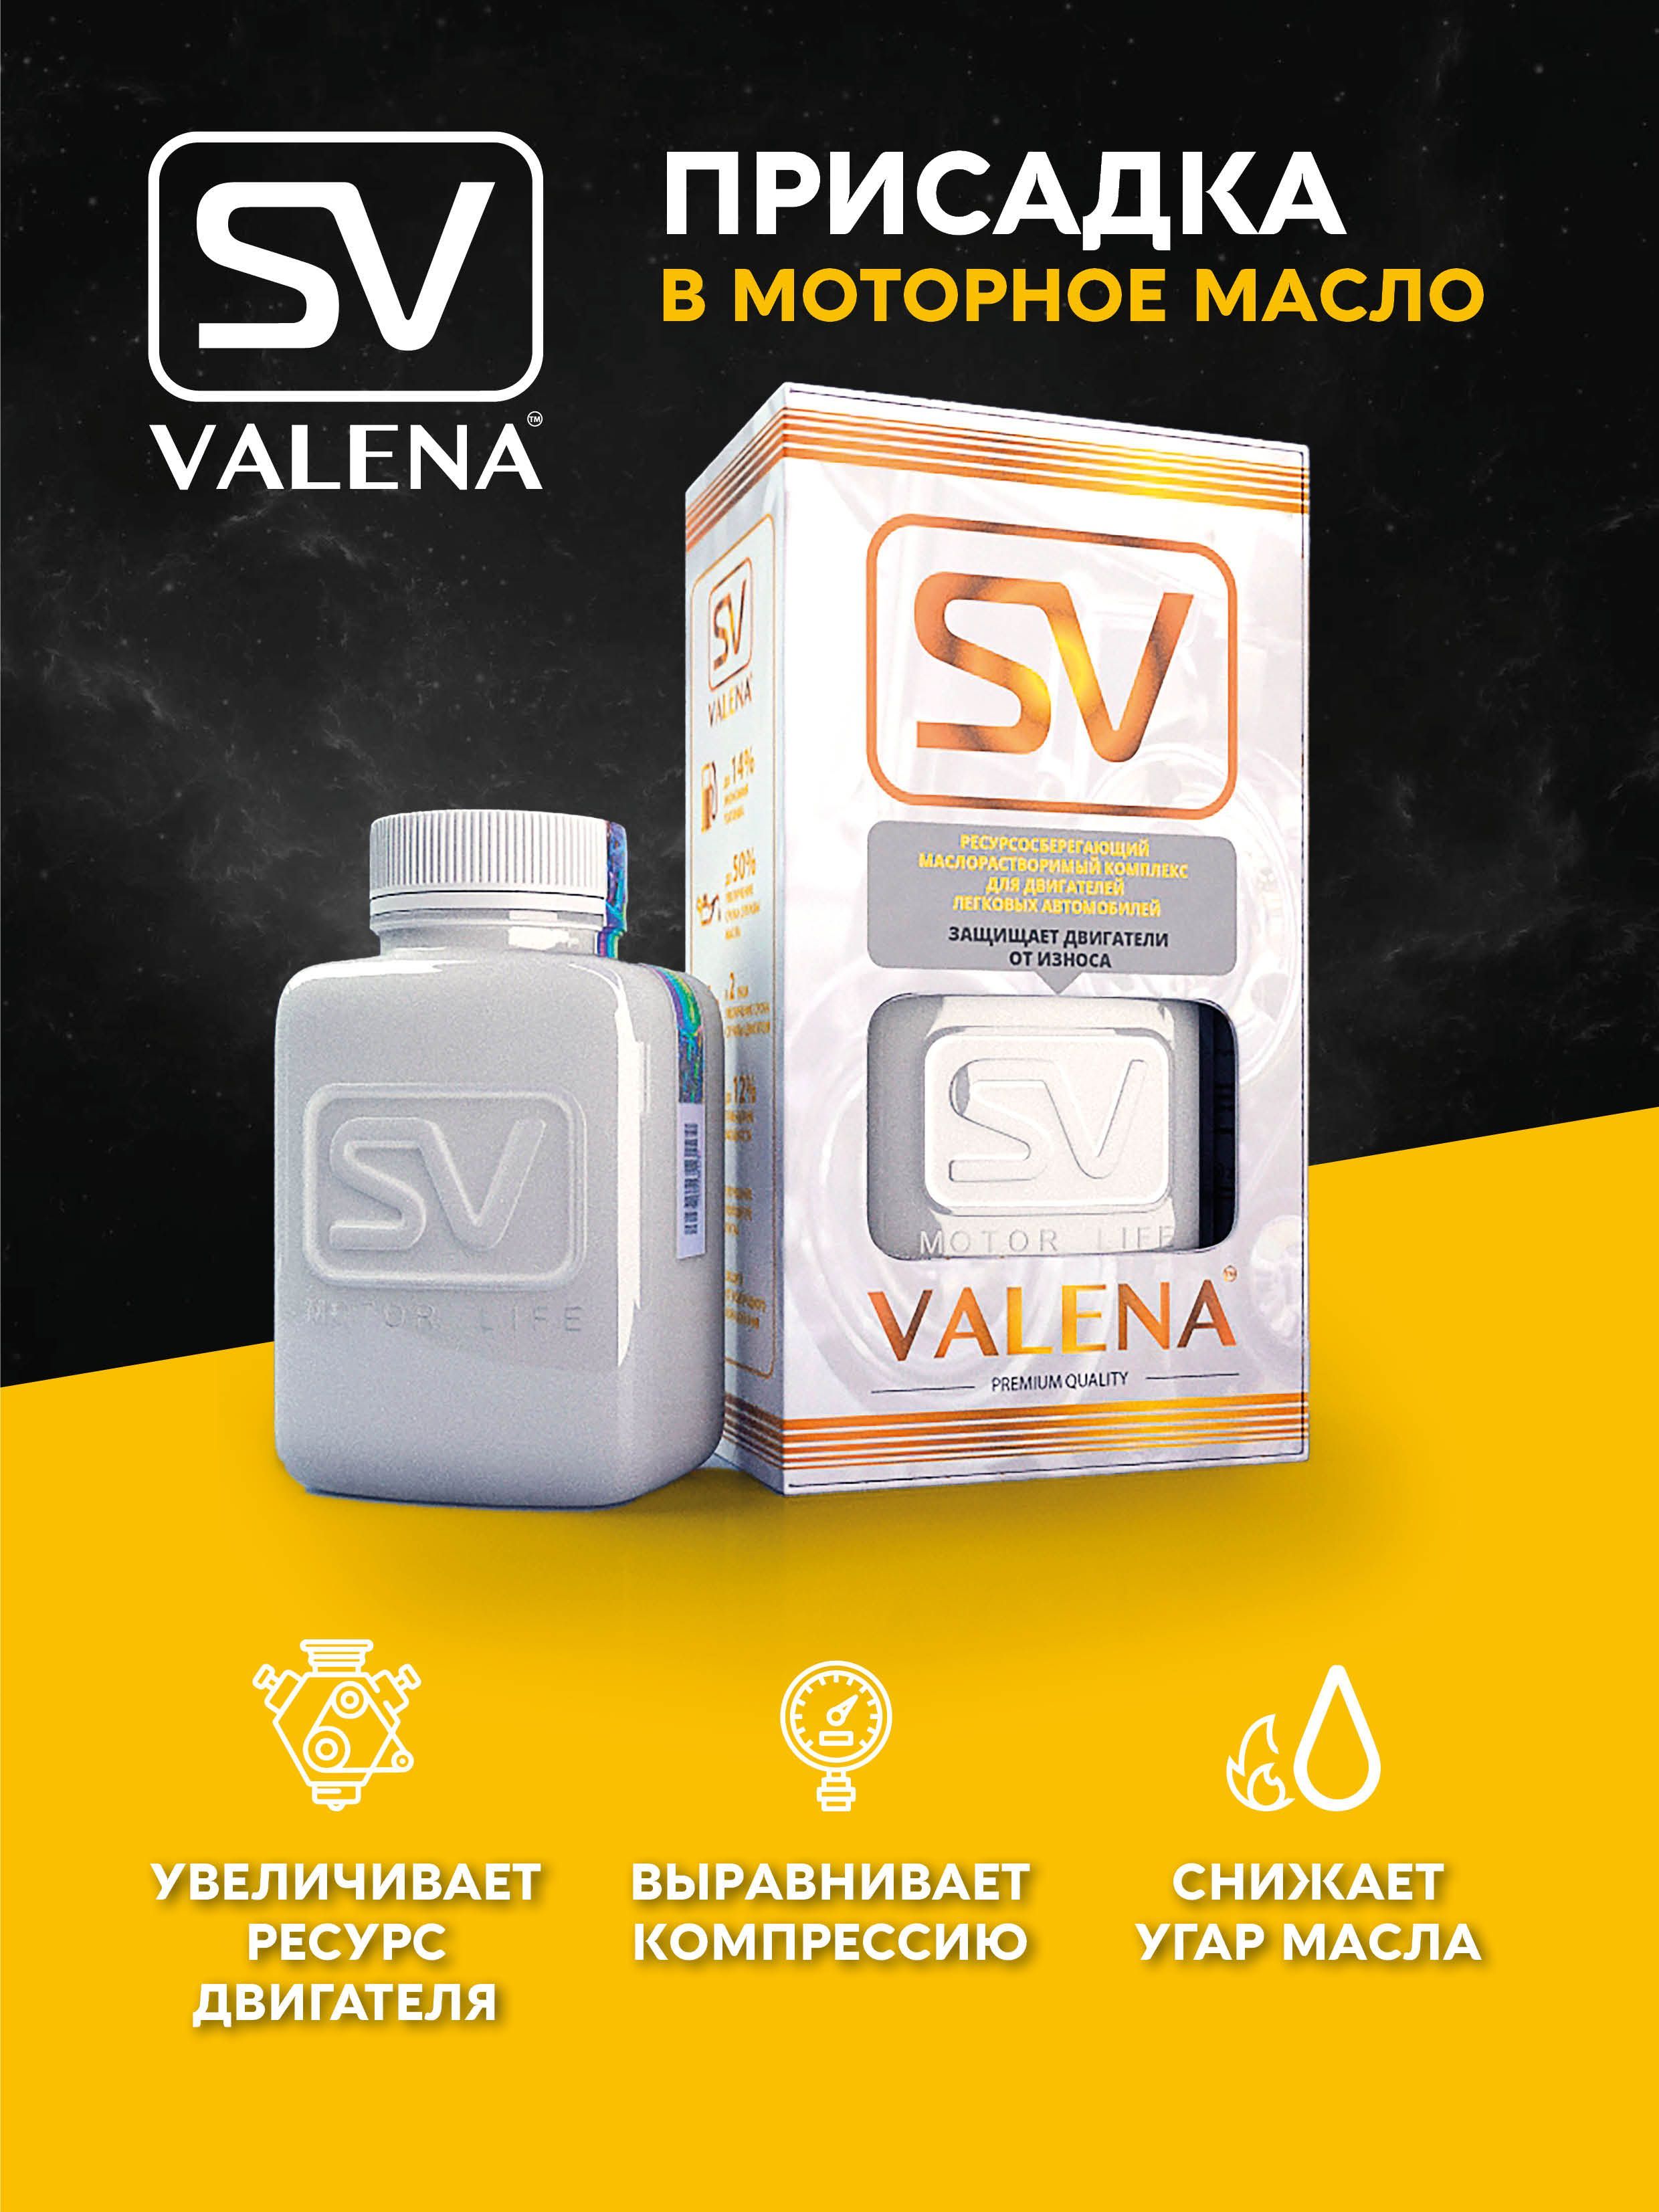 Валена св. Valena SV концентрат. Valena присадка в масло. Присадка в масло для двигателя Valena-SV. Valena-SV МКПП 200мл.